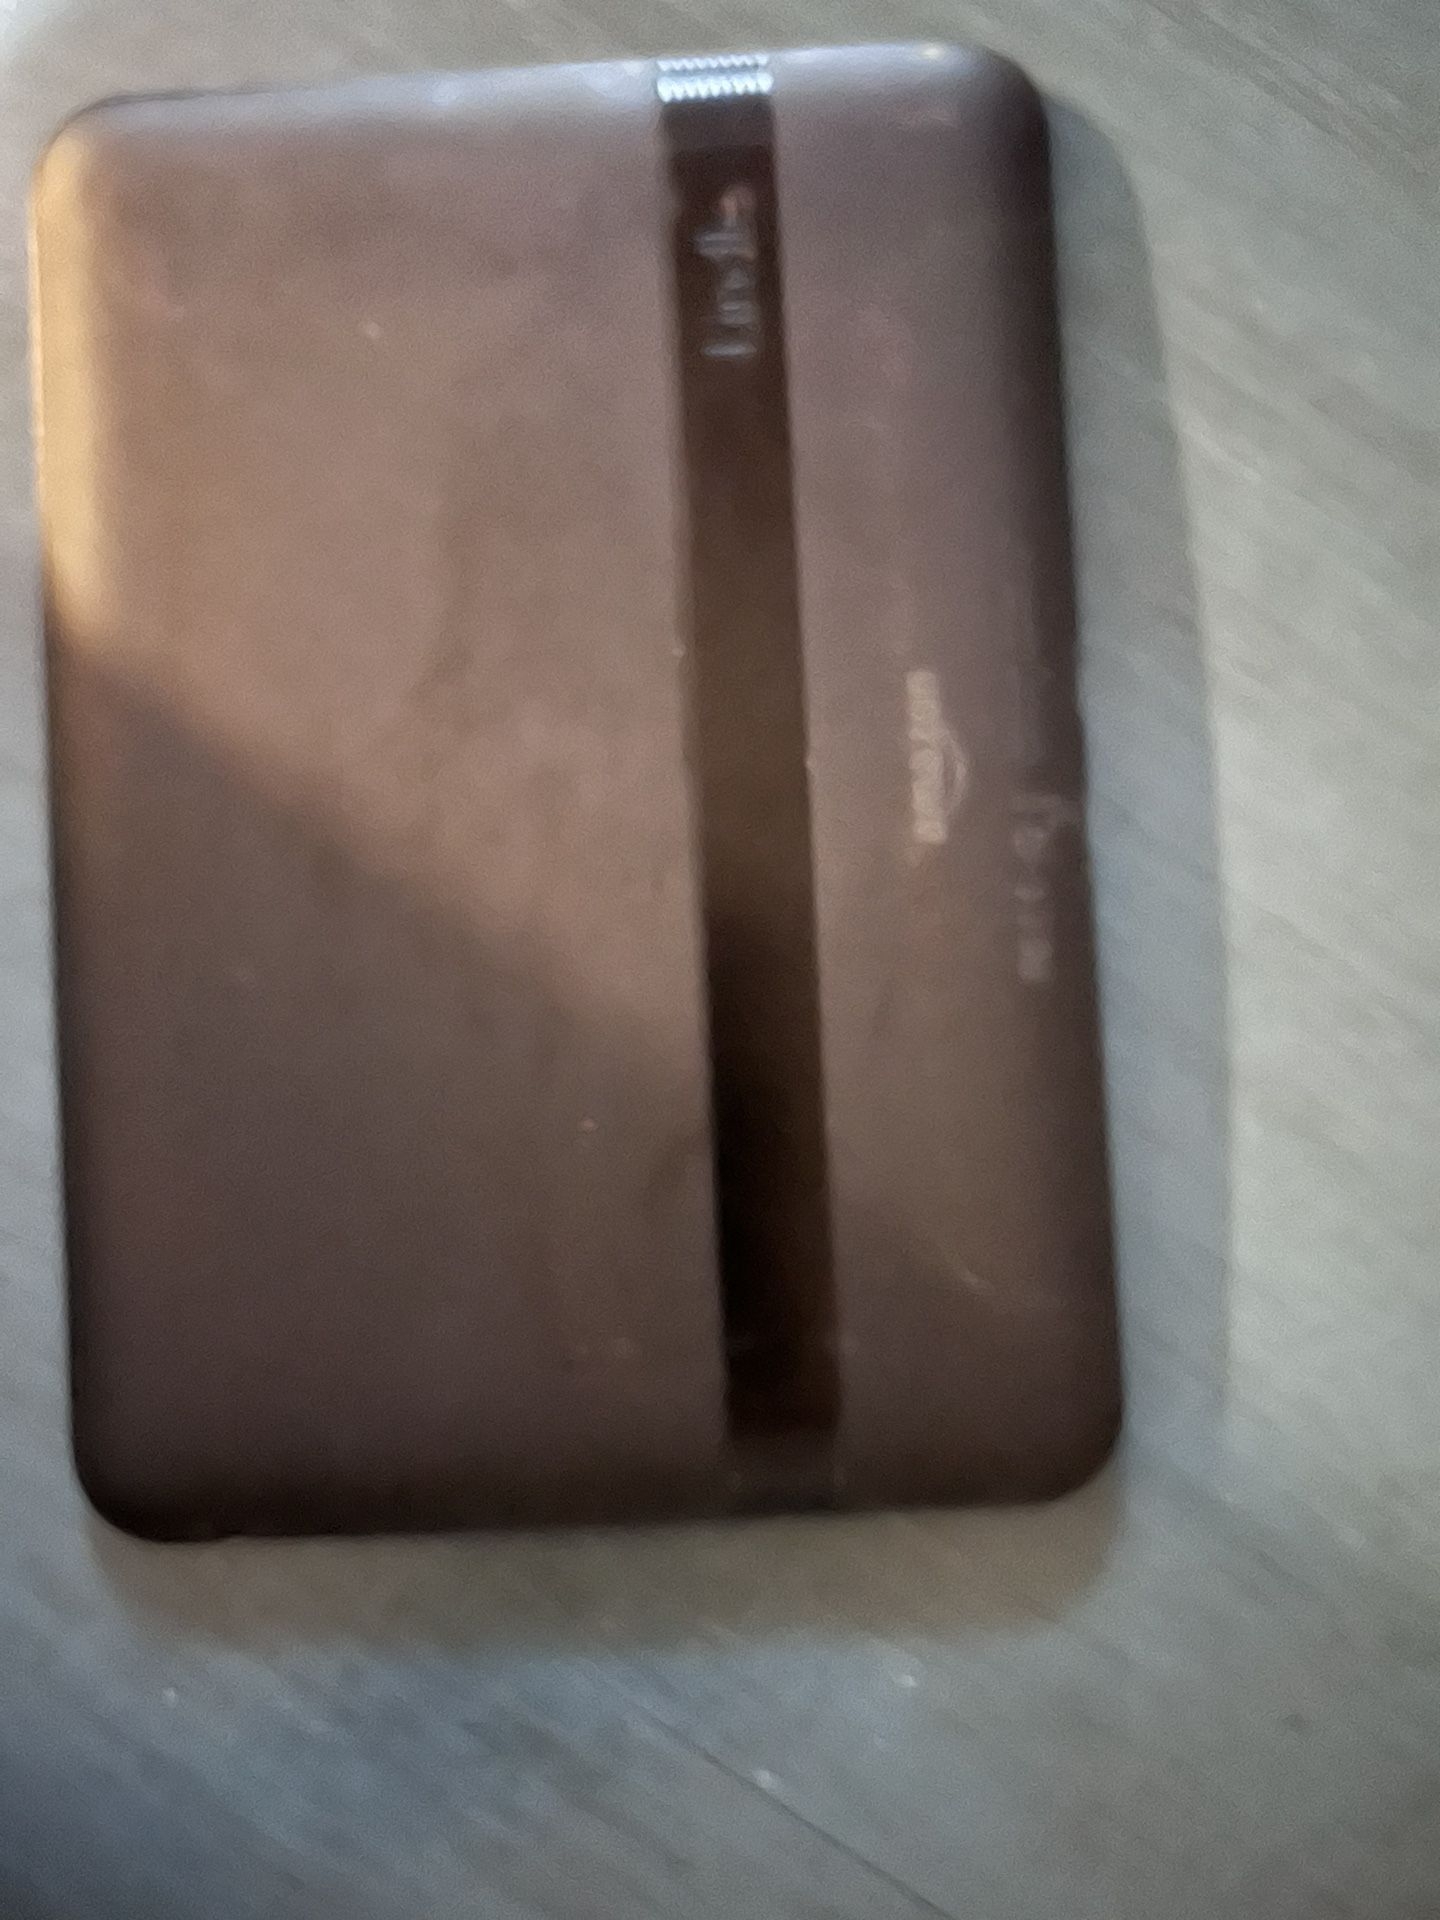 Amazon Kindle fire HD X43Z60 16 MB Wi-Fi 7 inch touchscreen tablet black